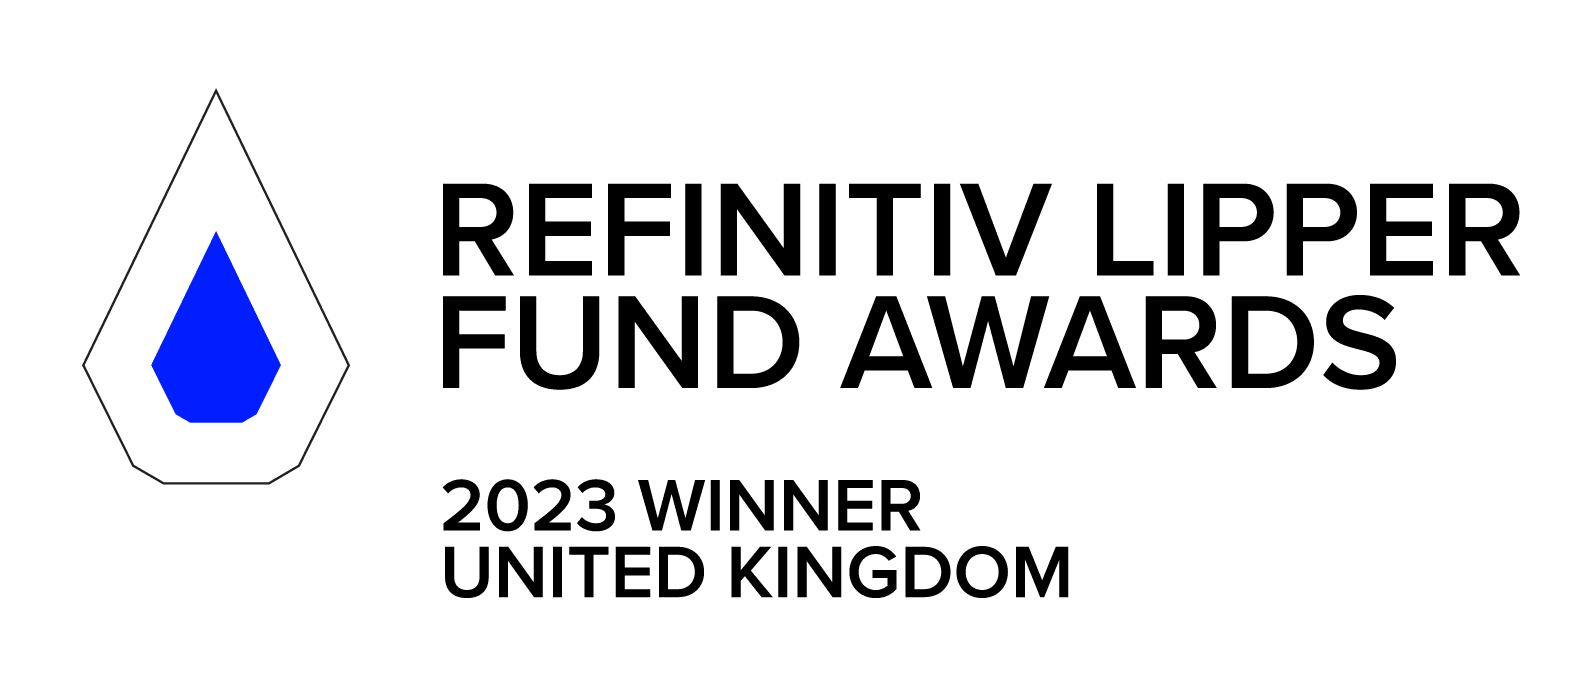 REFINITIV LIPPER FUND AWARDS 2022 WINNER - UNITED KINGDOM